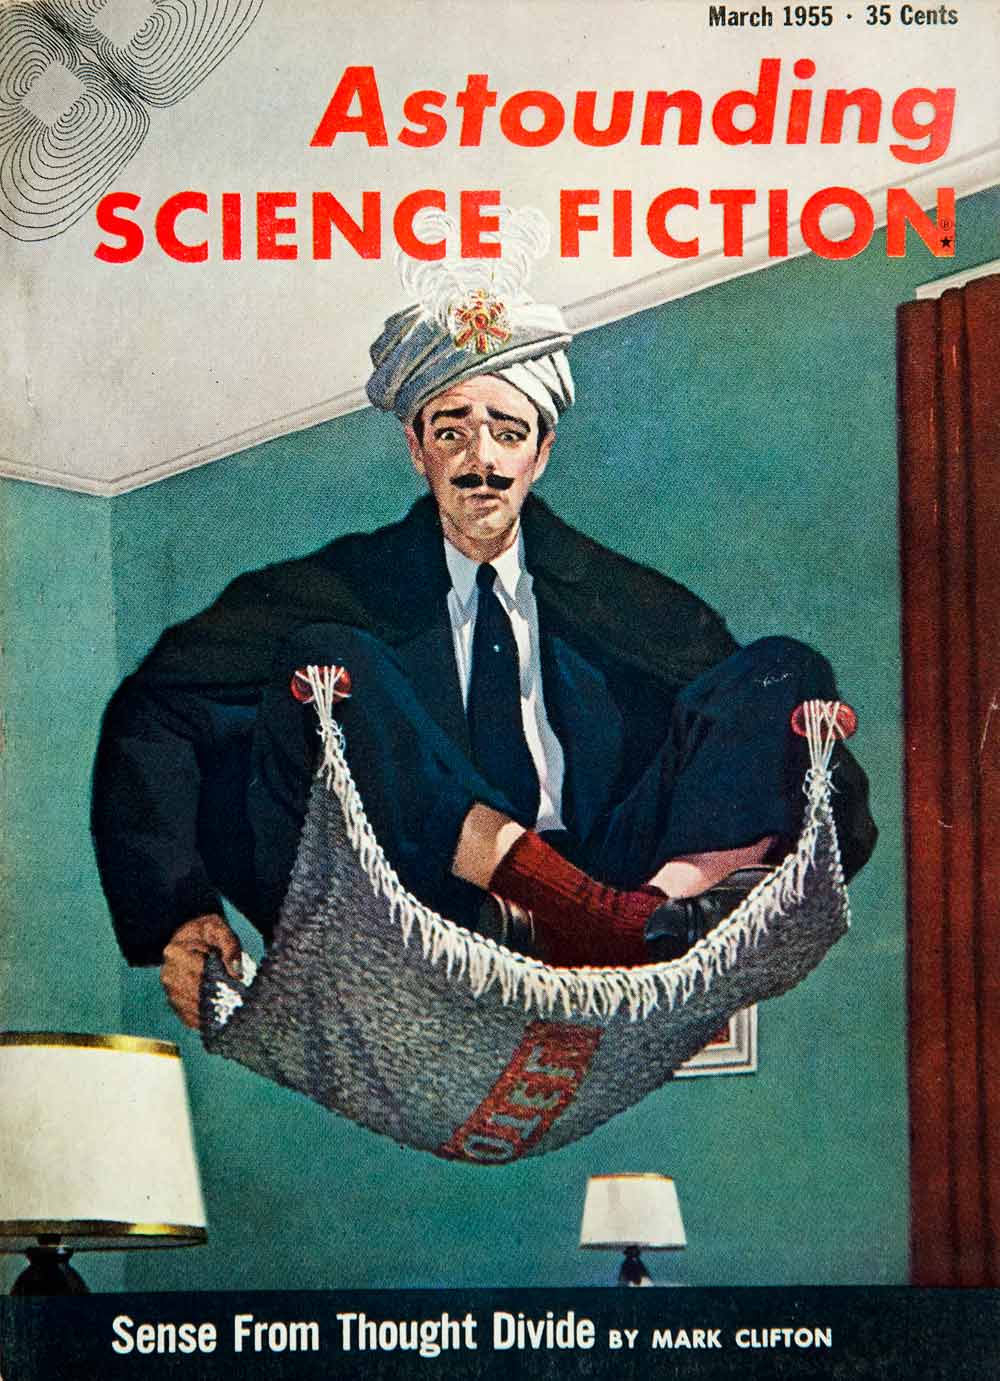 1955 Cover Astounding Science Fiction Art Richard Van Dongen Mark Clifton YSFC3